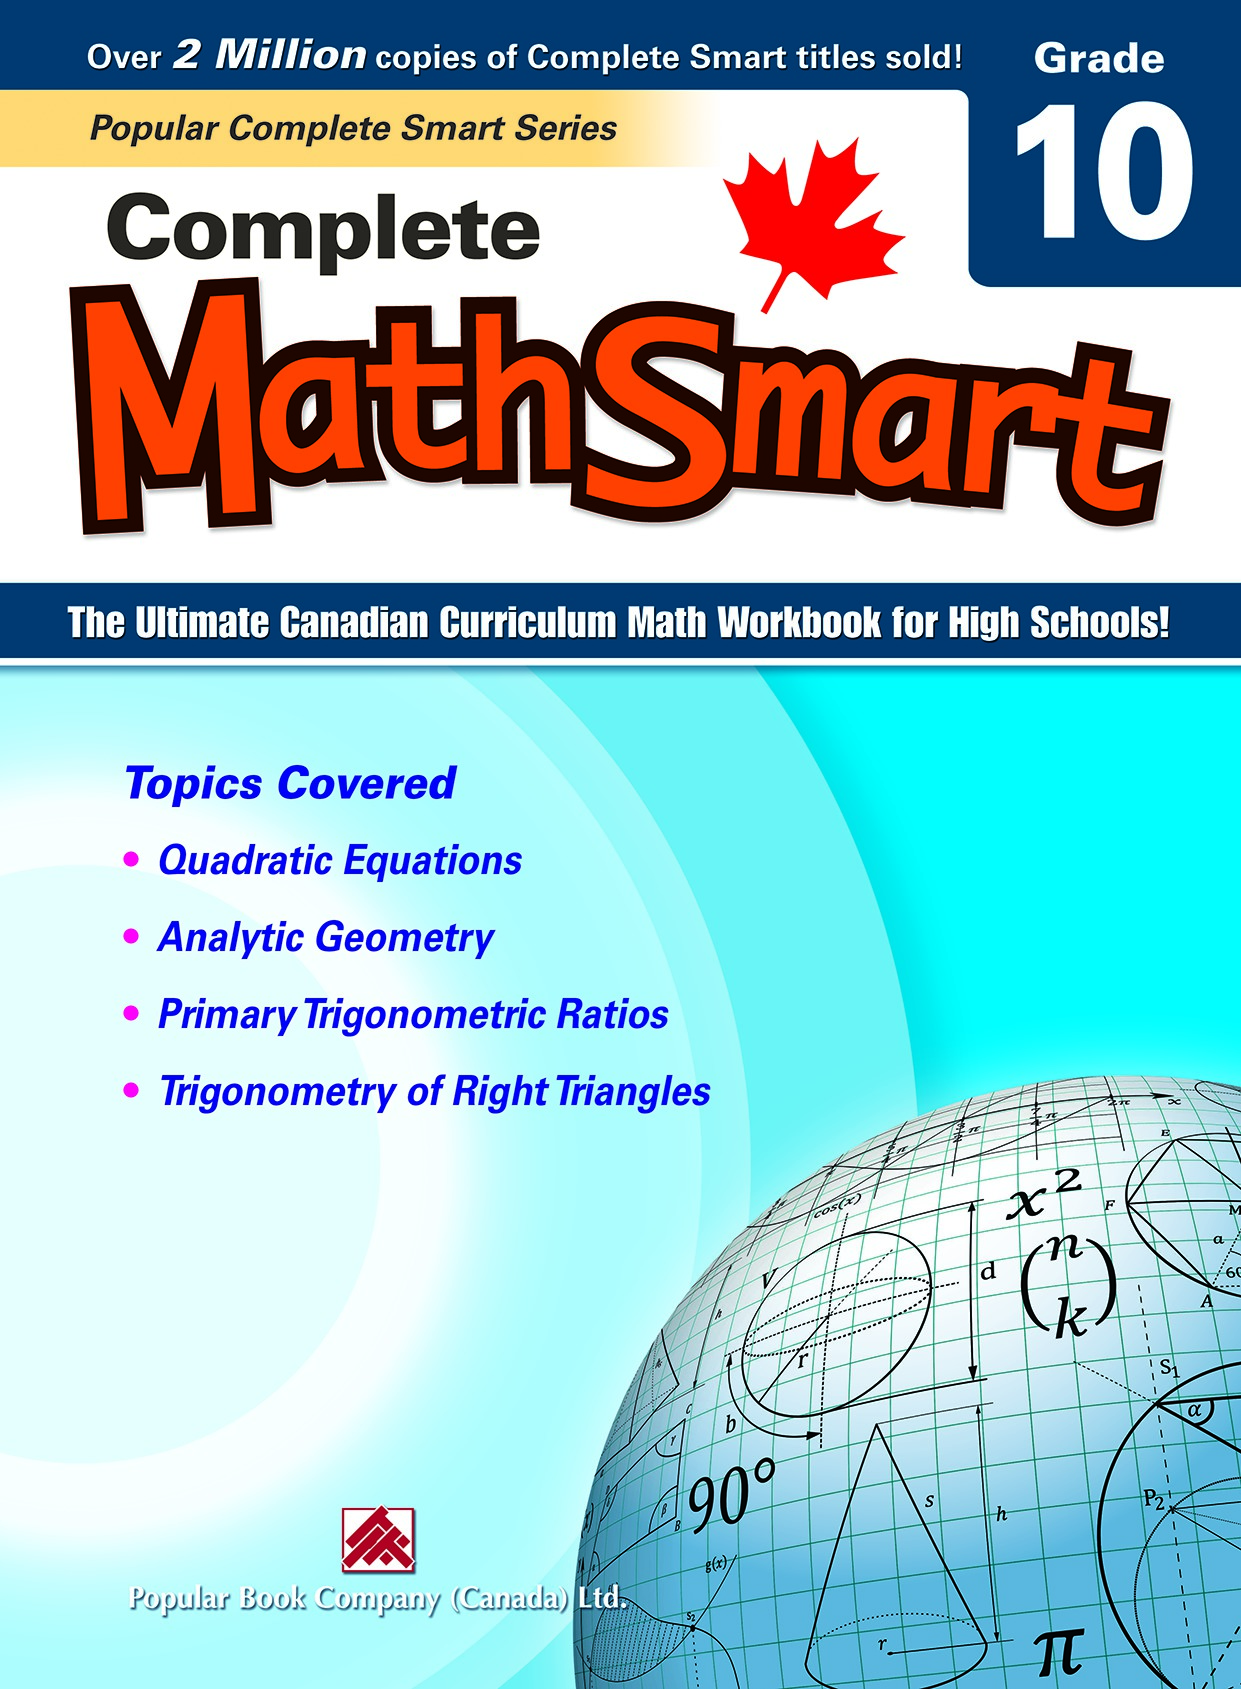 Complete MathSmart (Grades 9 -12) - Popular Book Company (Canada) Ltd.